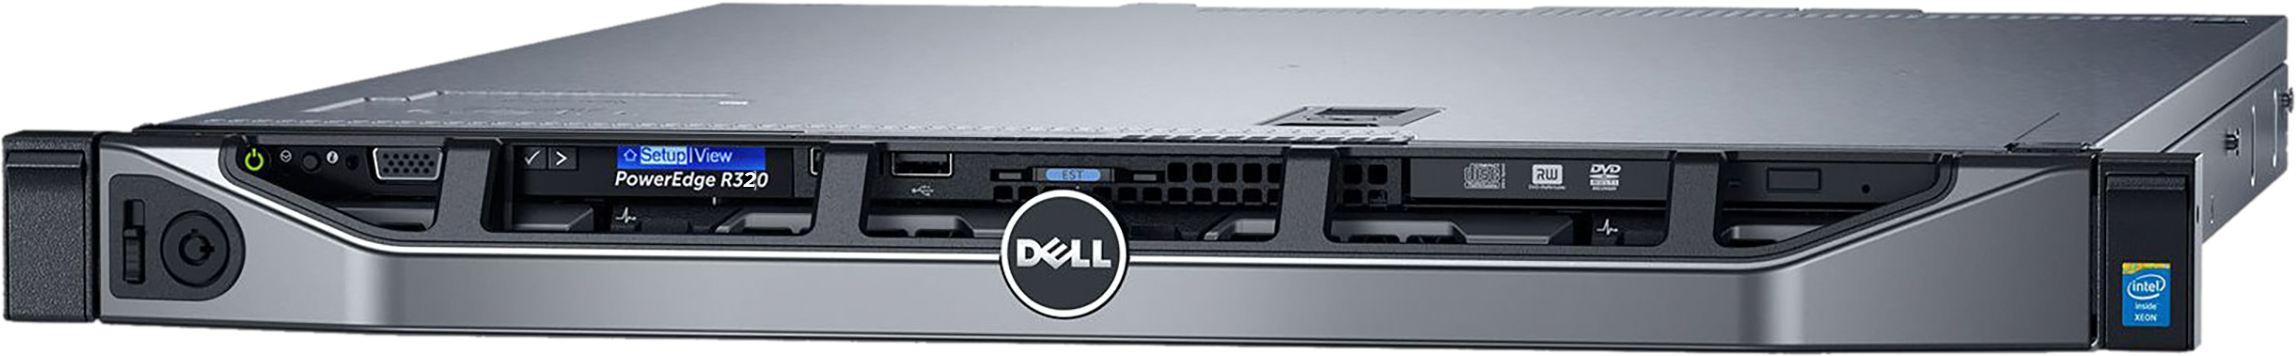 Аренда физического сервера DELL R320 / E5-2450 v2 / 32 GB RAM / 2 × 4 TB HDD / H310